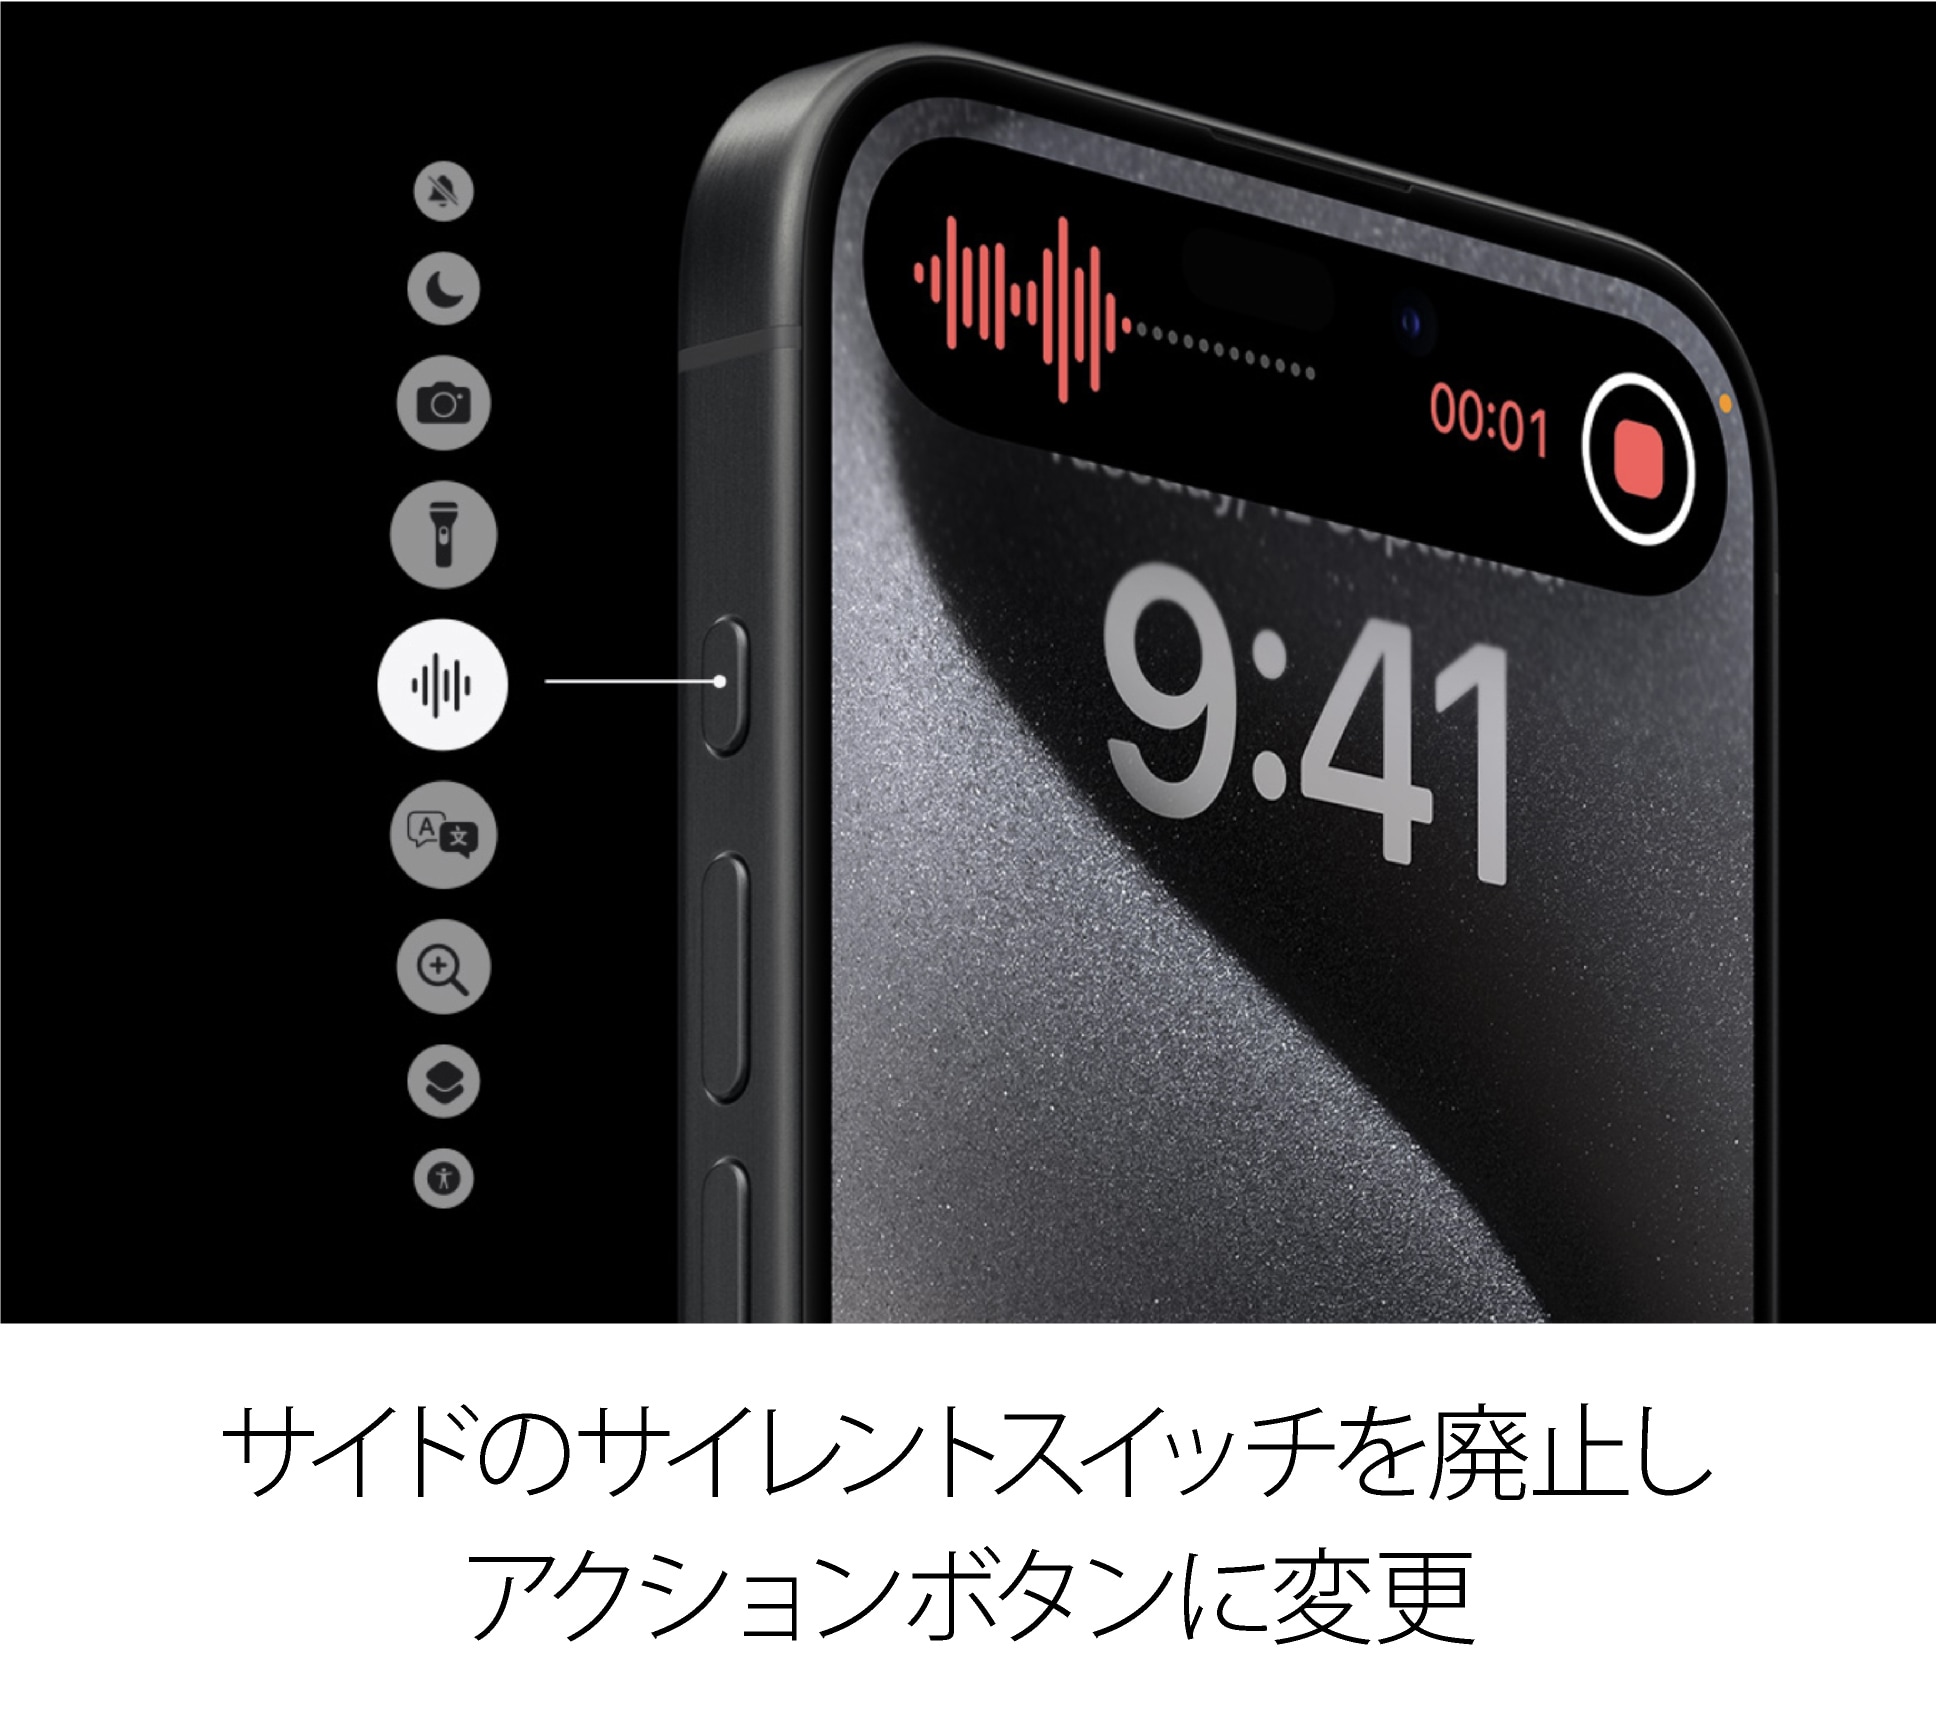 iPhone 15 Pro Max 香港版 A3108 販売